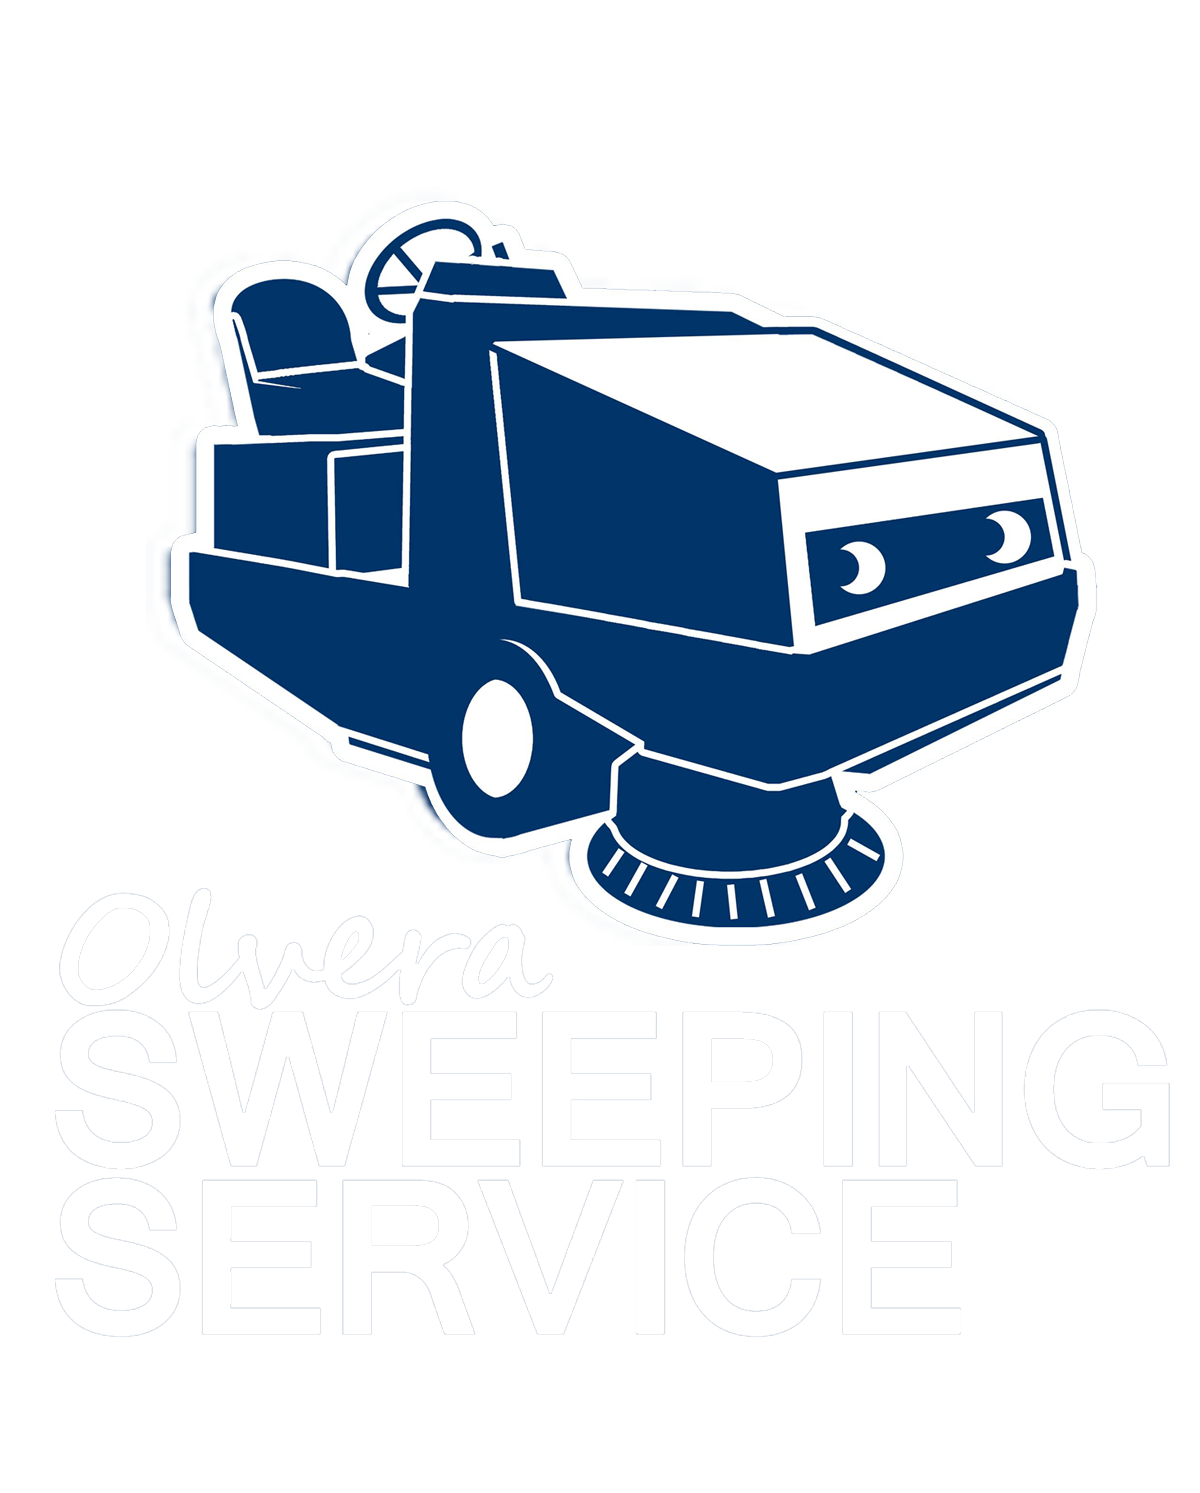 Olvera Sweeping Services LLC